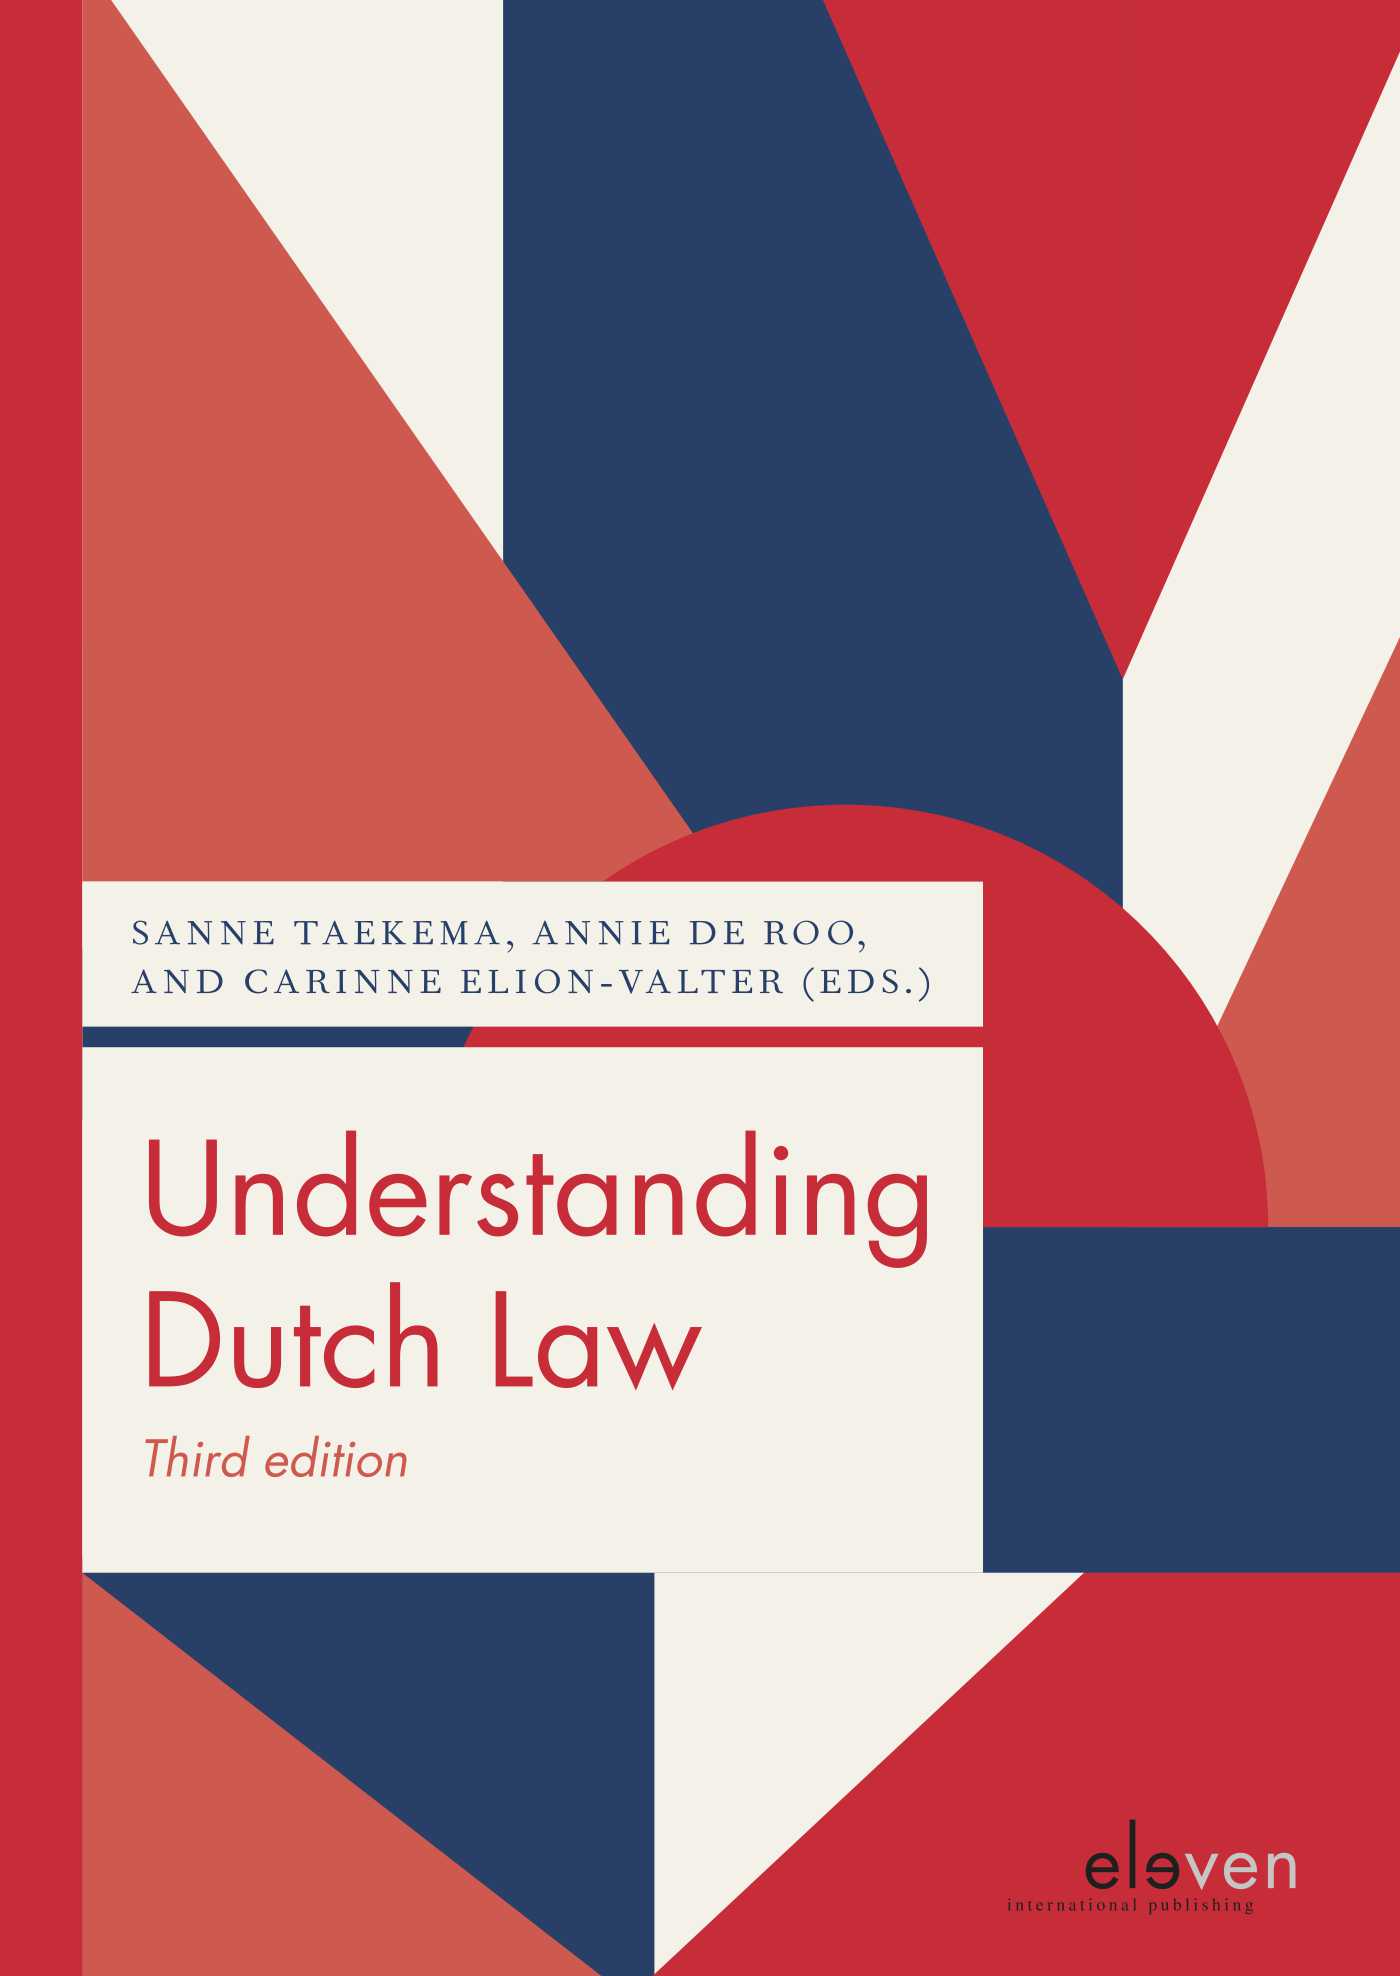 assignment under dutch law